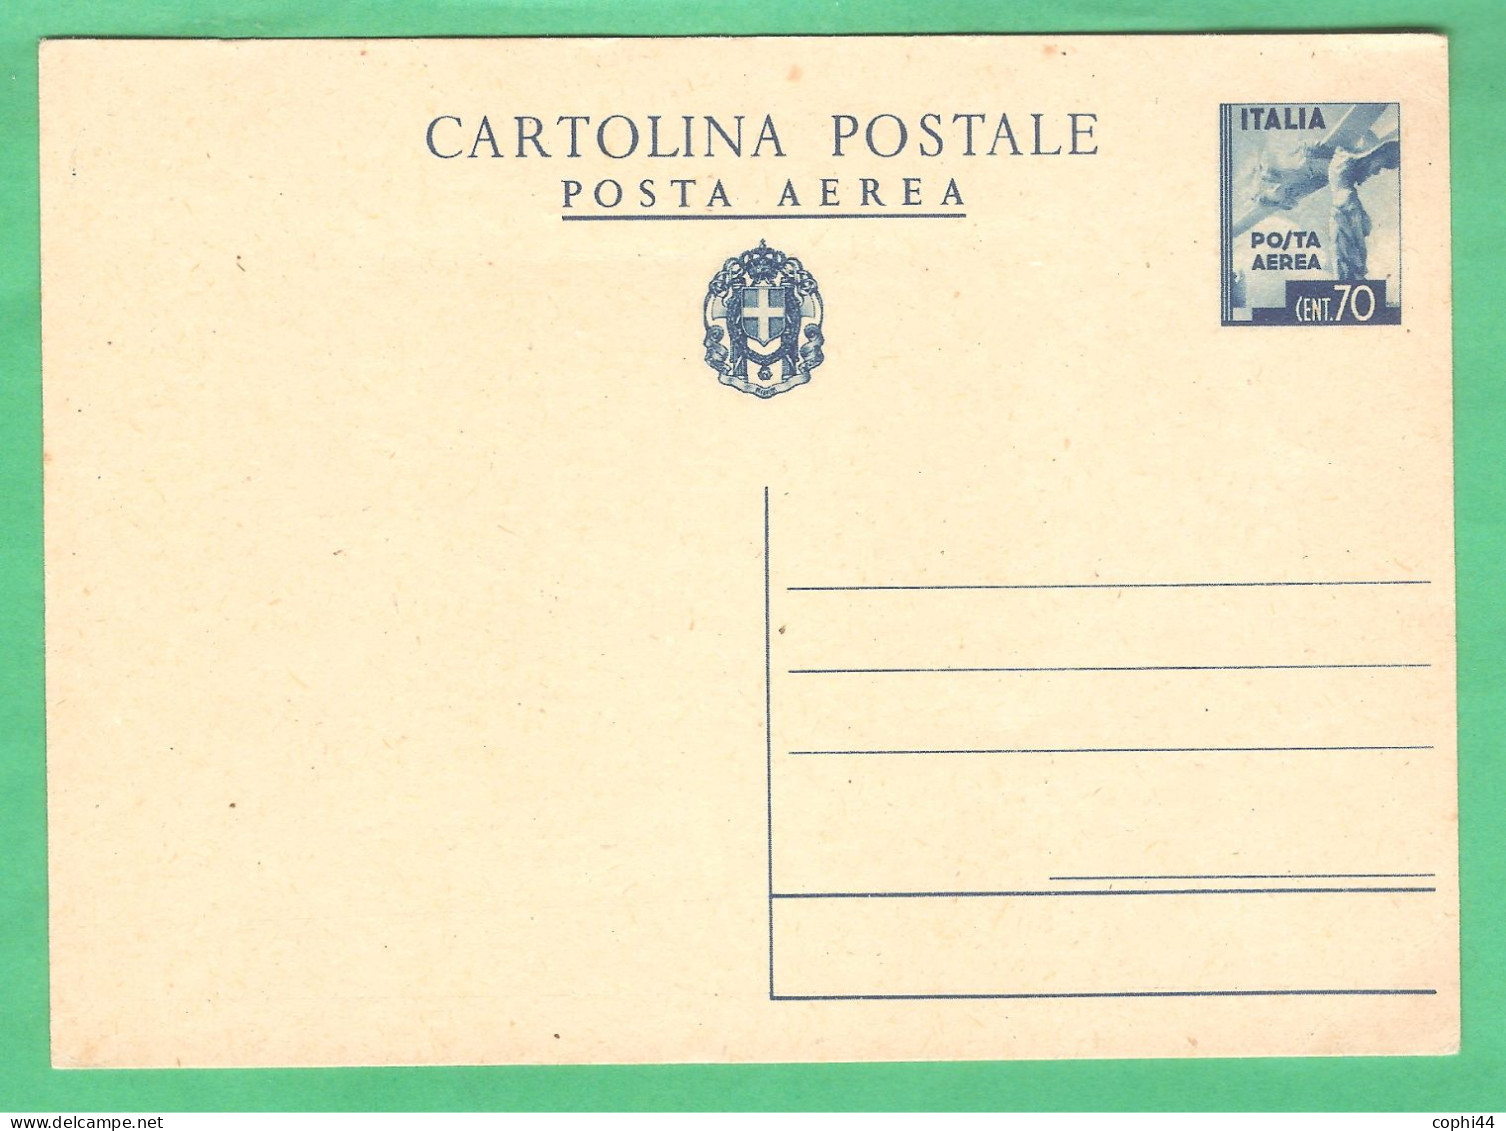 REGNO D'ITALIA 1943 CARTOLINA POSTALE VEIII POSTA AEREA 70 C Turchino (FILAGRANO C100) NUOVA - Entiers Postaux